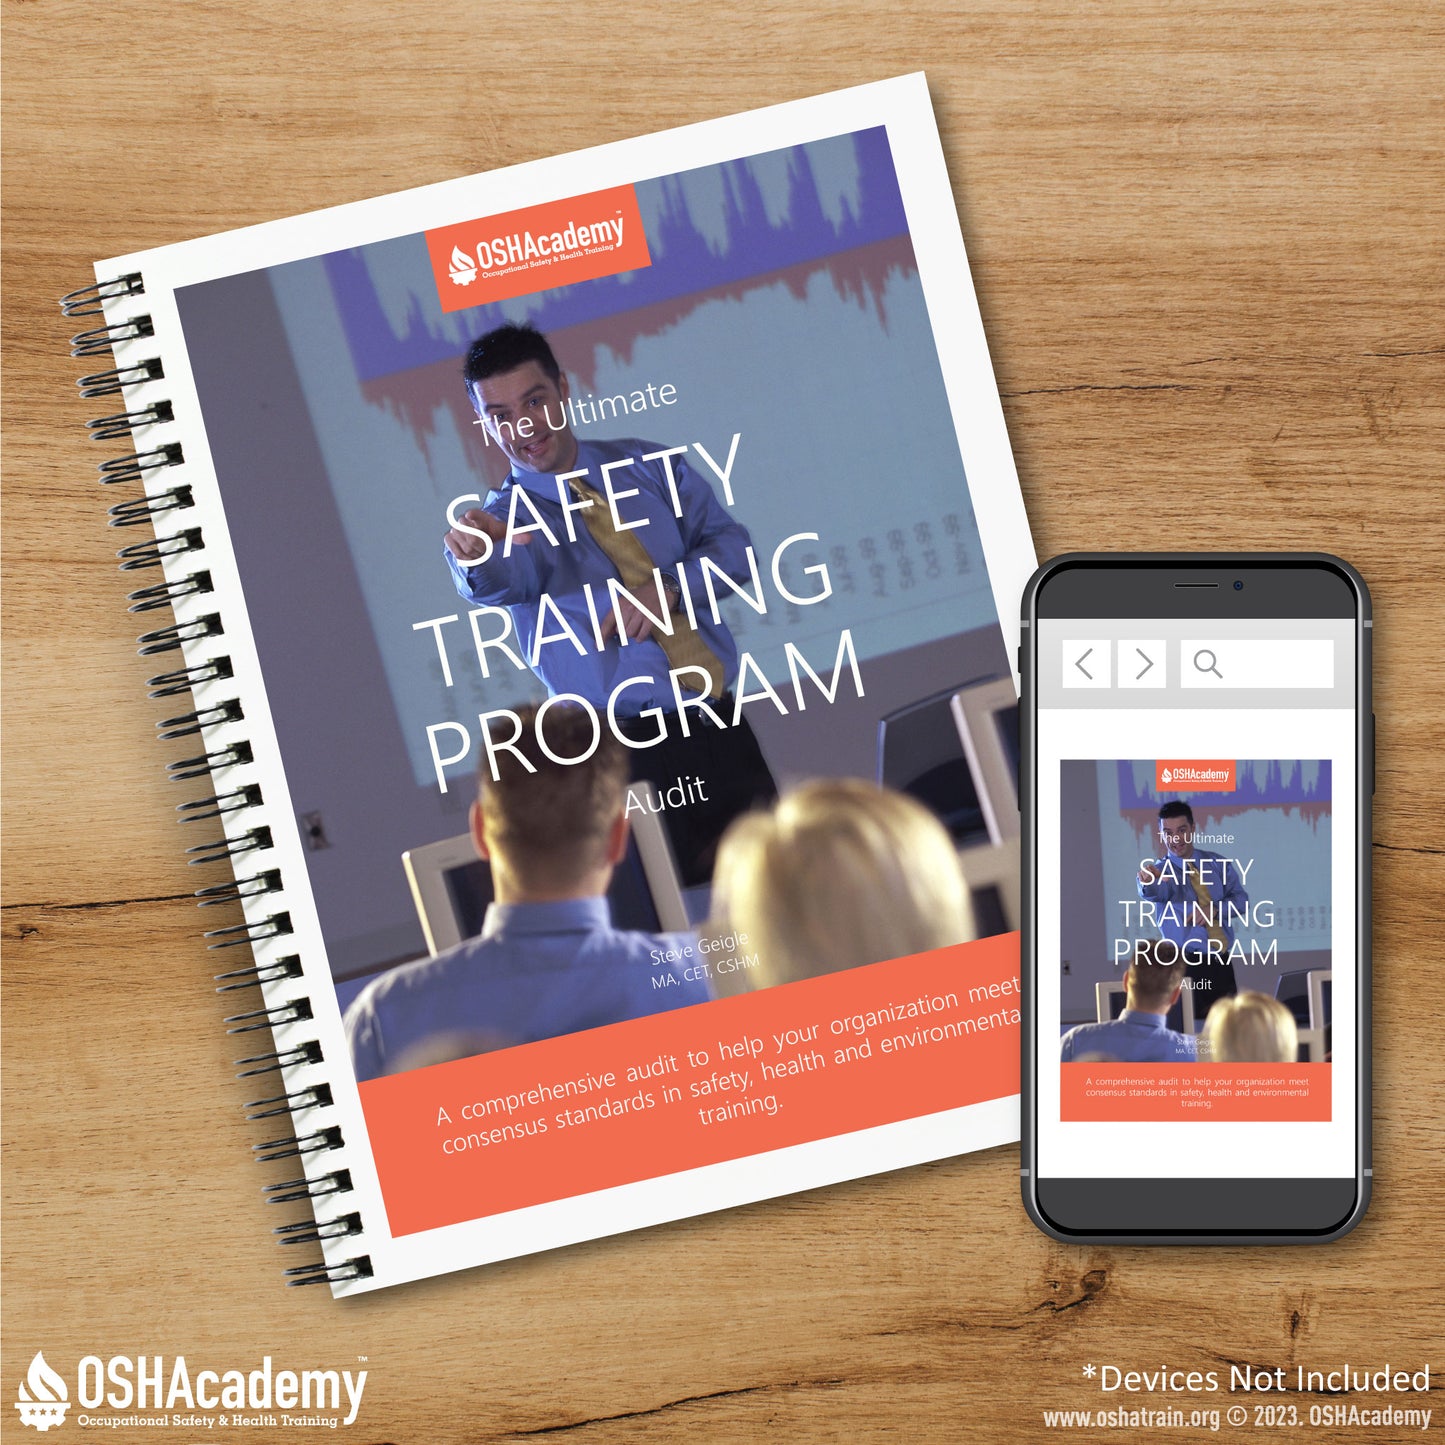 The Ultimate Safety Training Program Audit